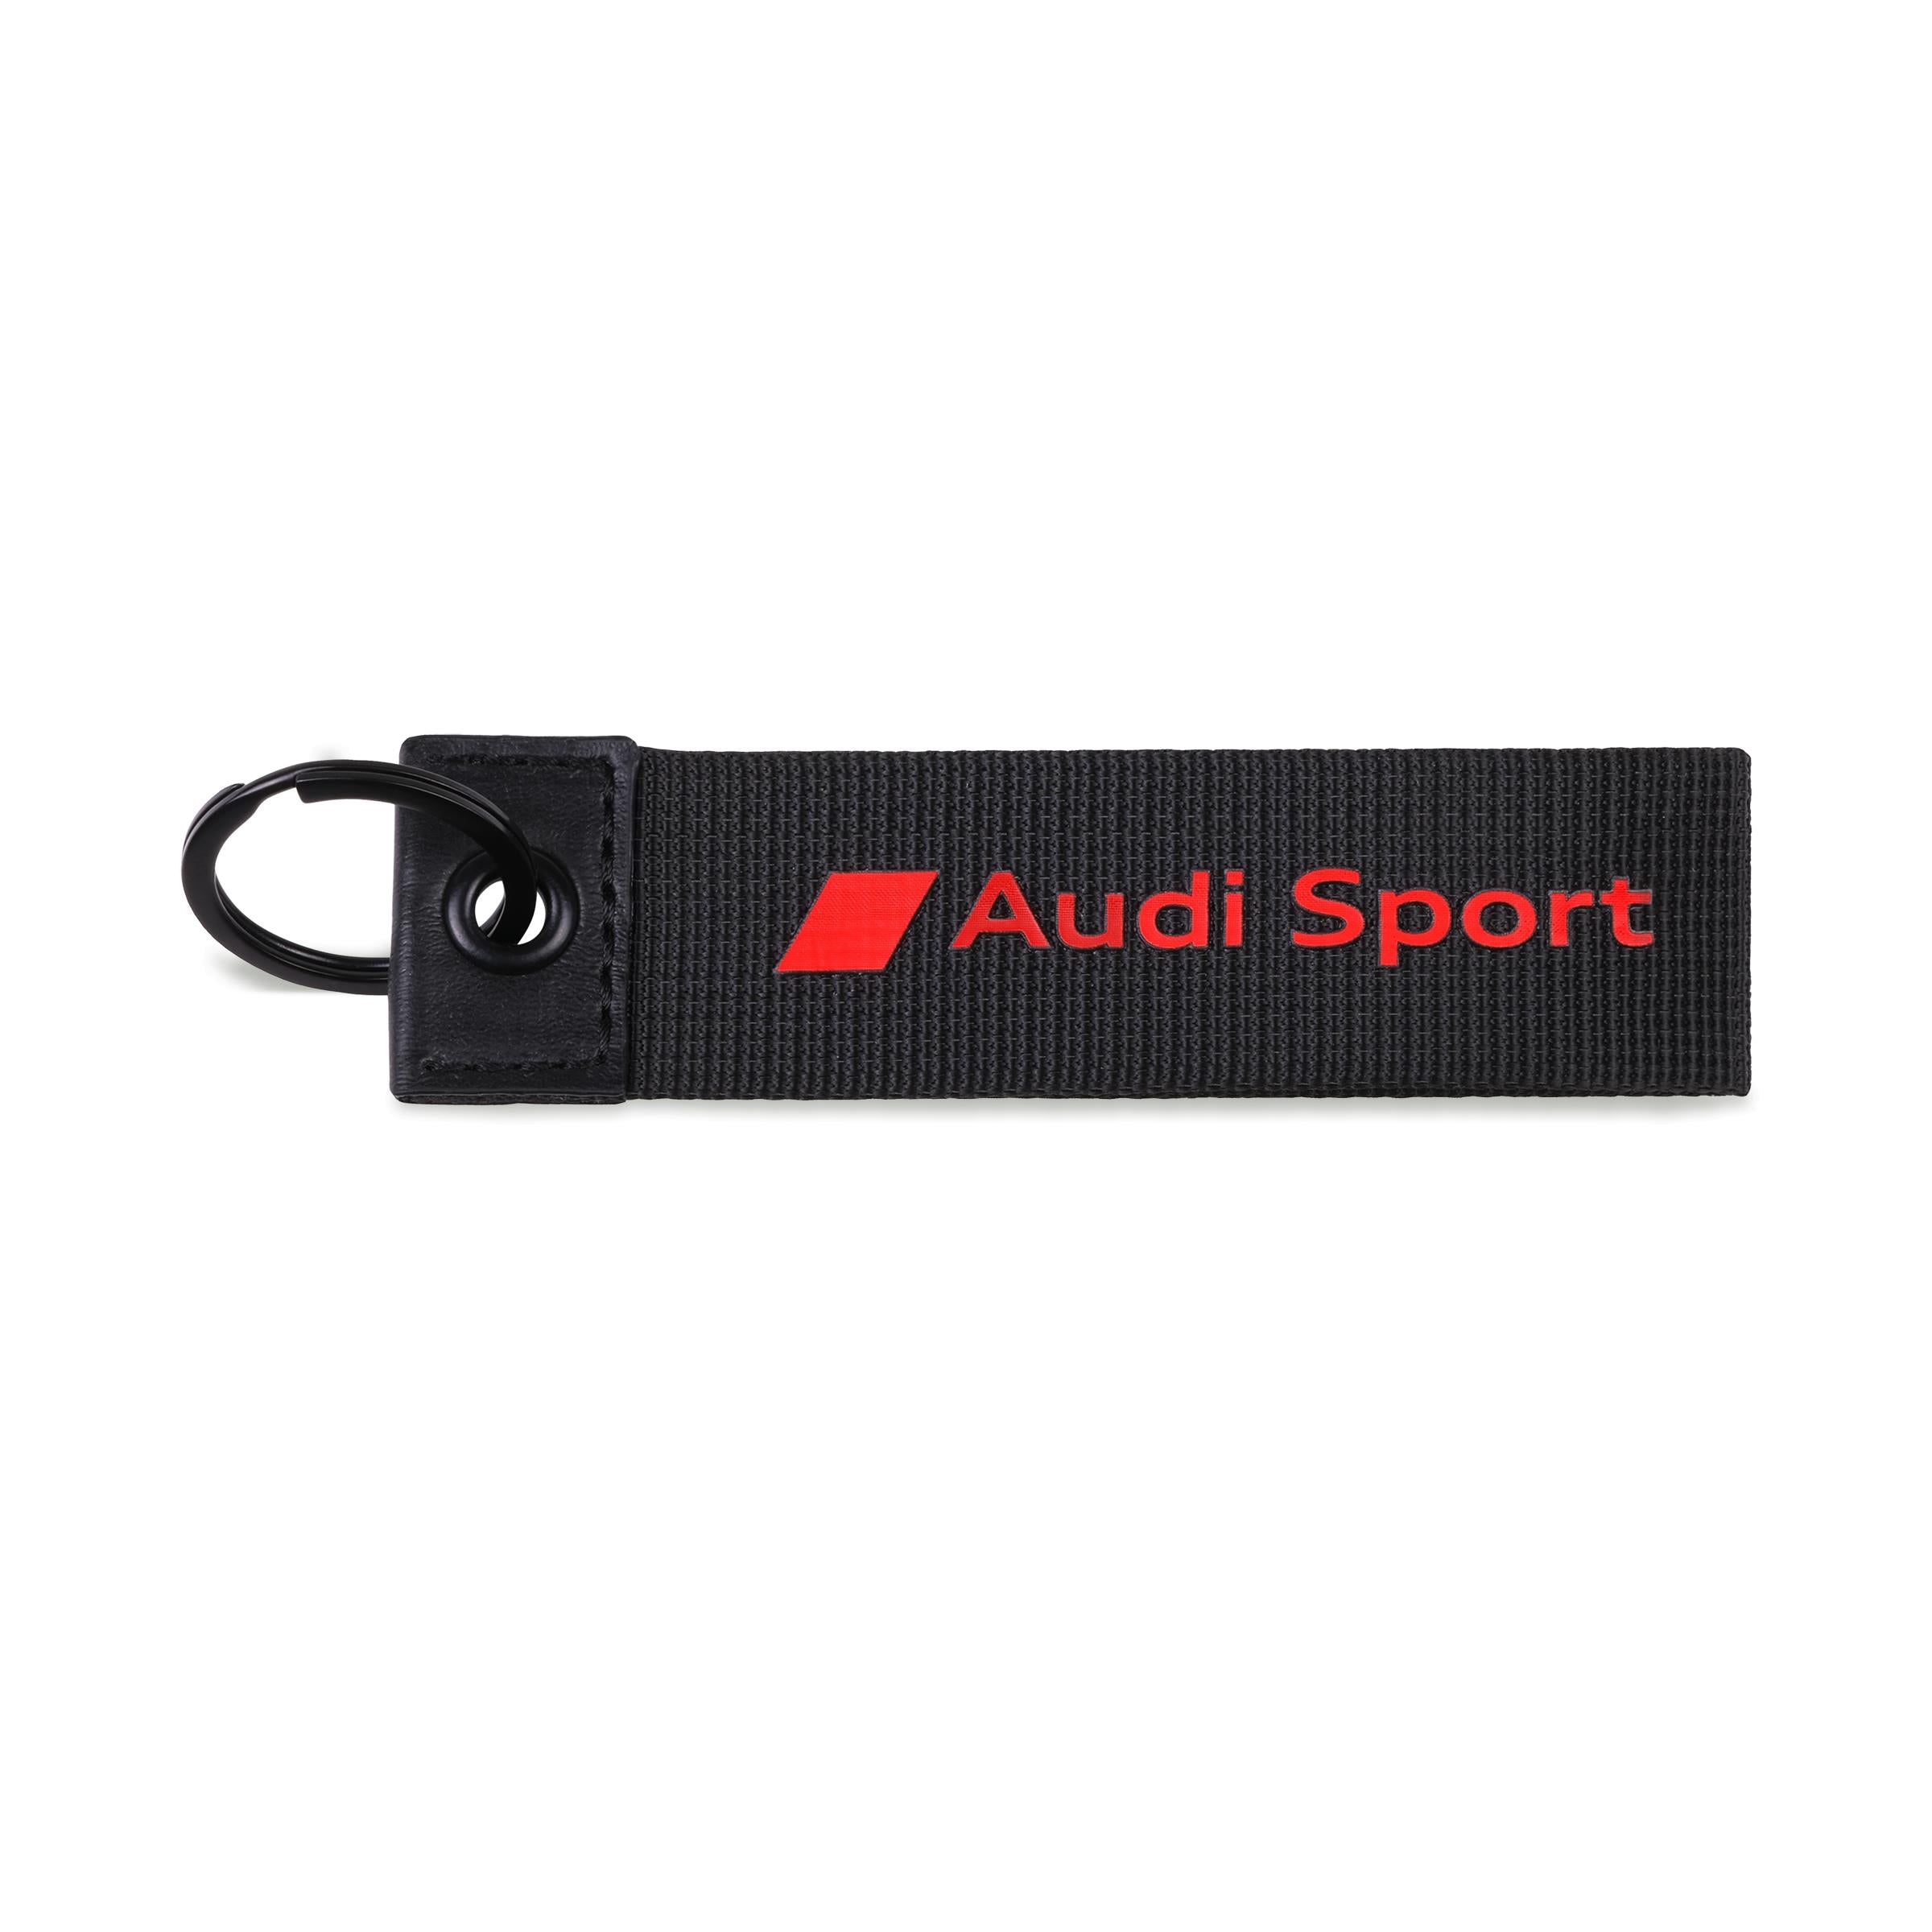 Audi Sport Key ring, black